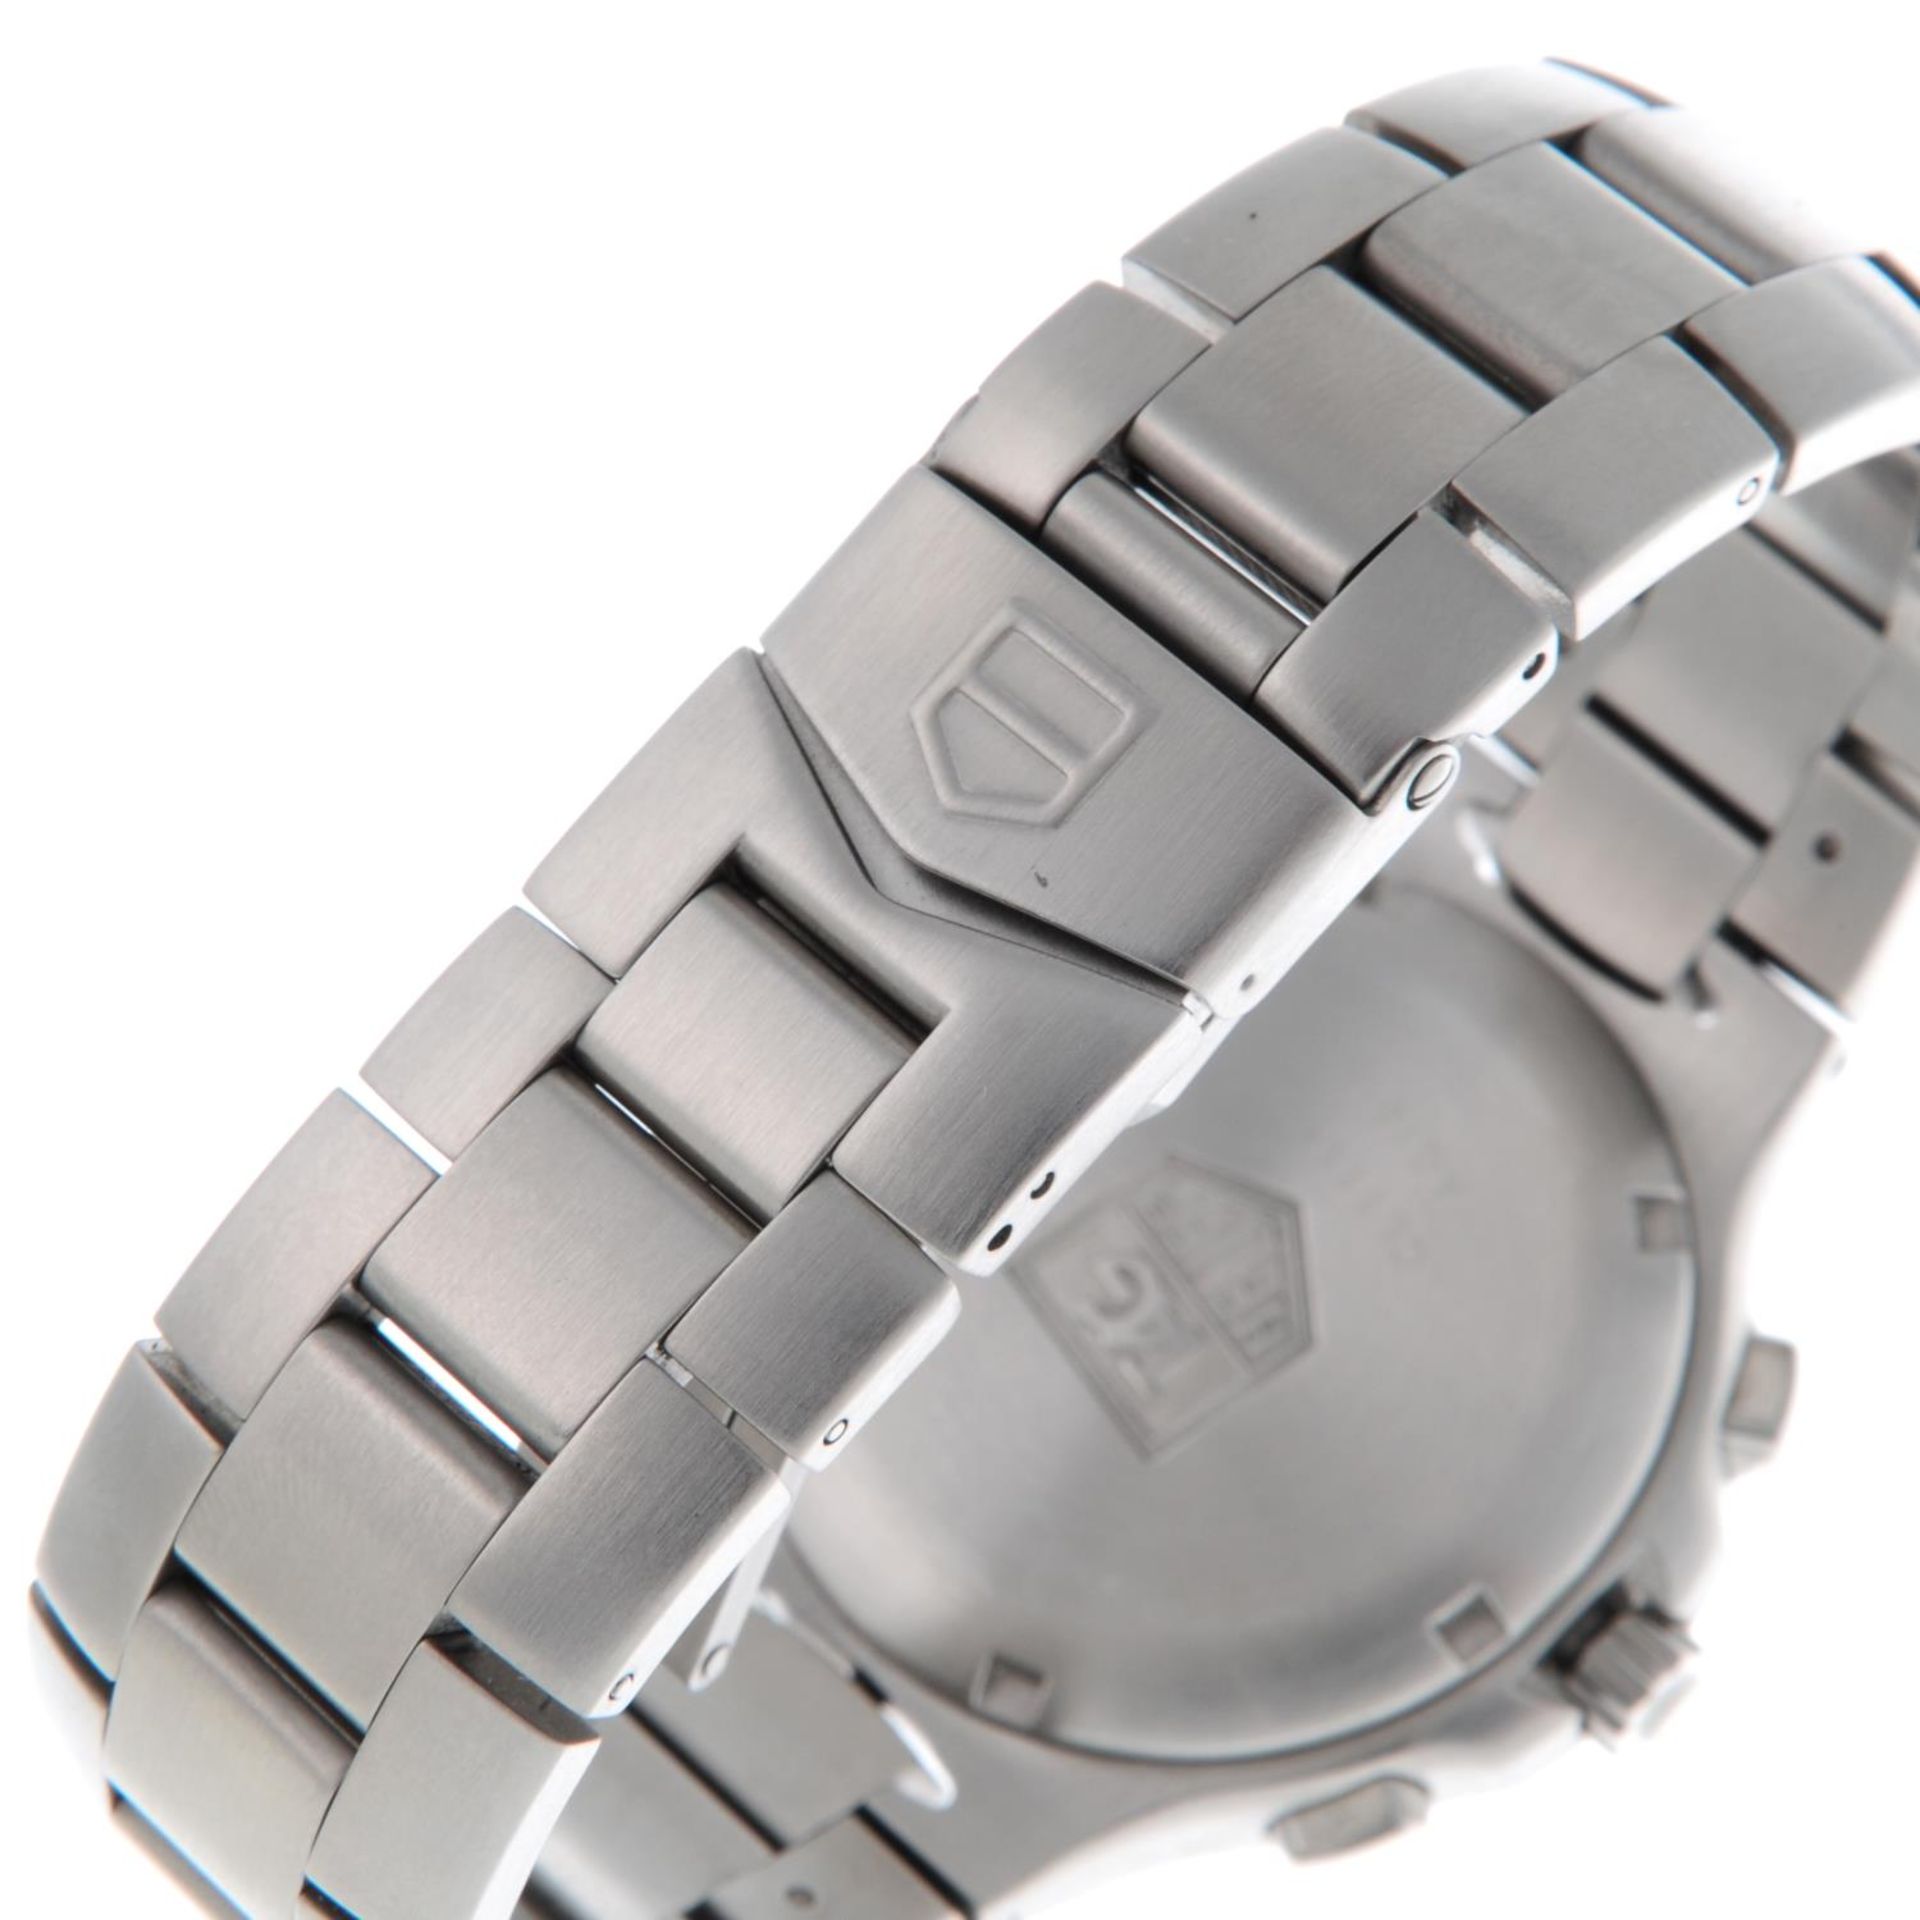 TAG HEUER - a Kirium chronograph bracelet watch. - Image 2 of 4